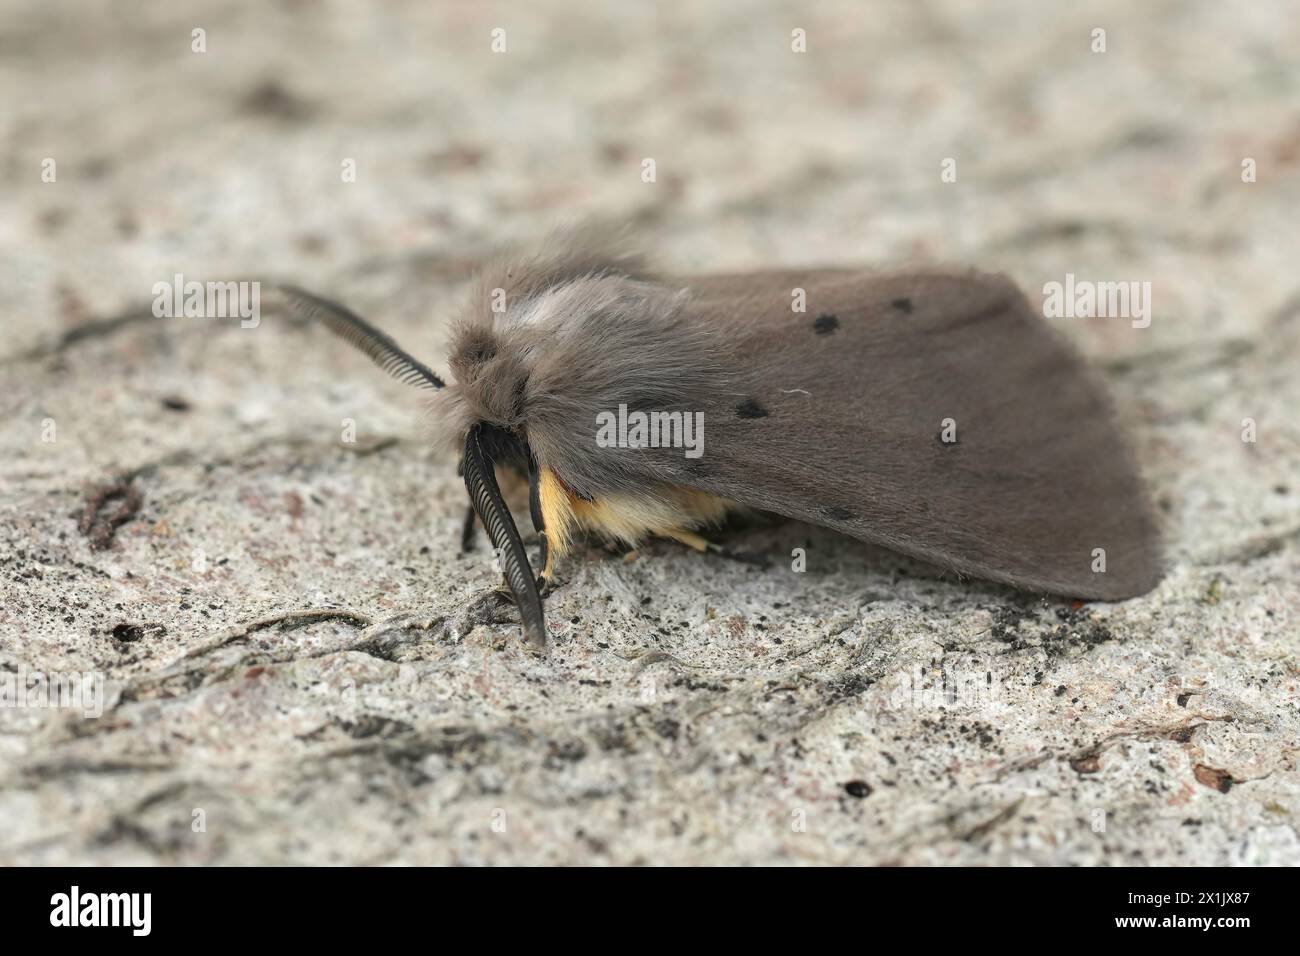 Detailed closeupo n a European muslin moth, Diaphora mendica sitting on wood Stock Photo